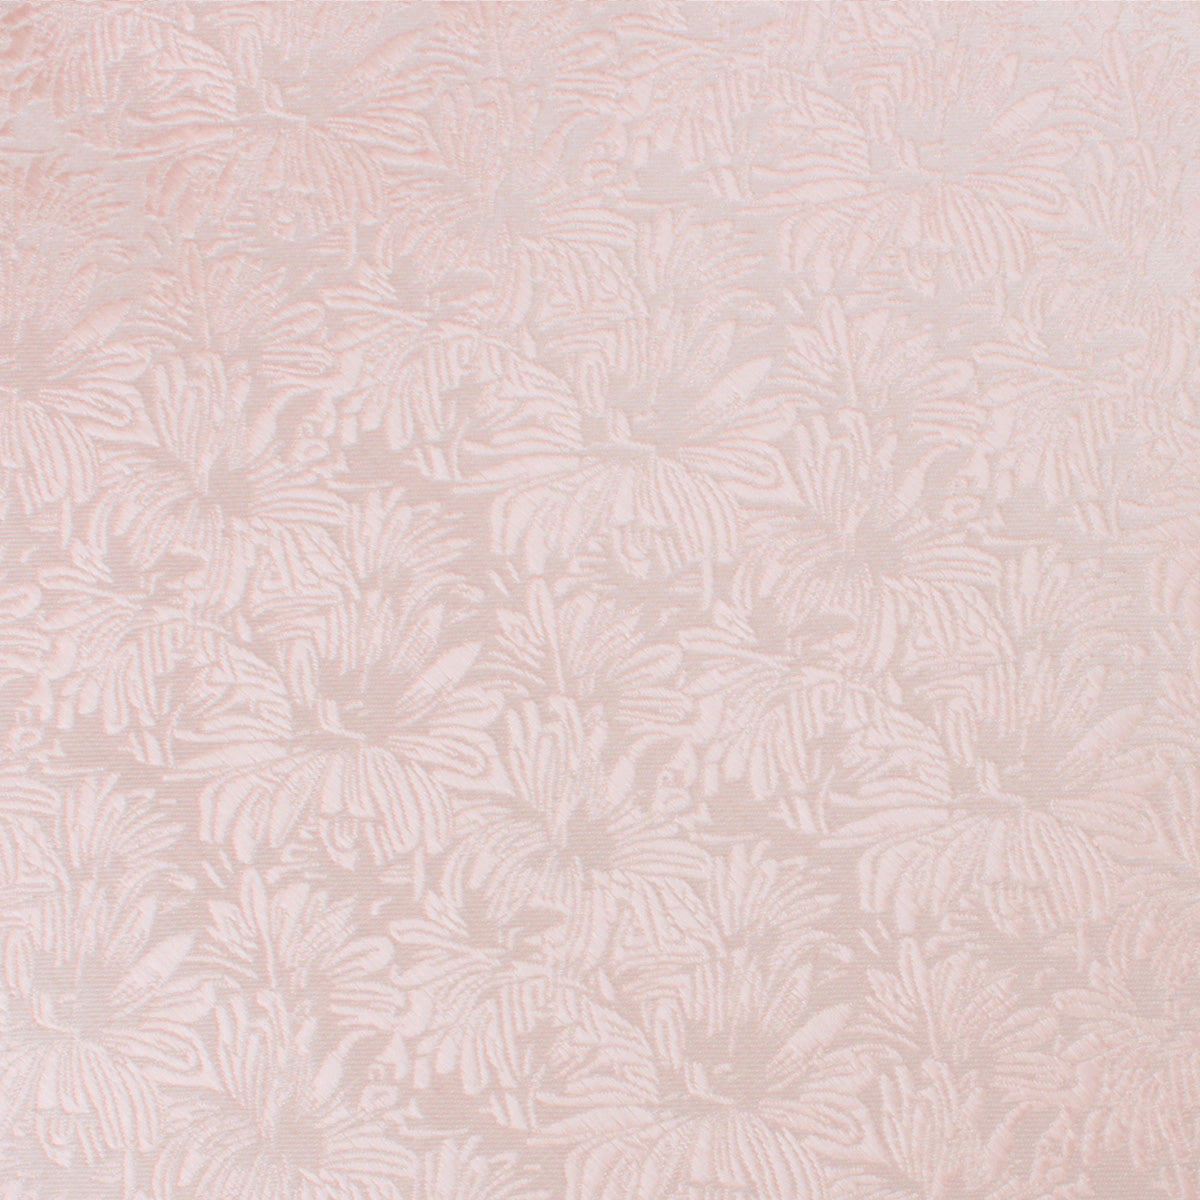 Blush Pink Daisy Flowers Floral Necktie Fabric